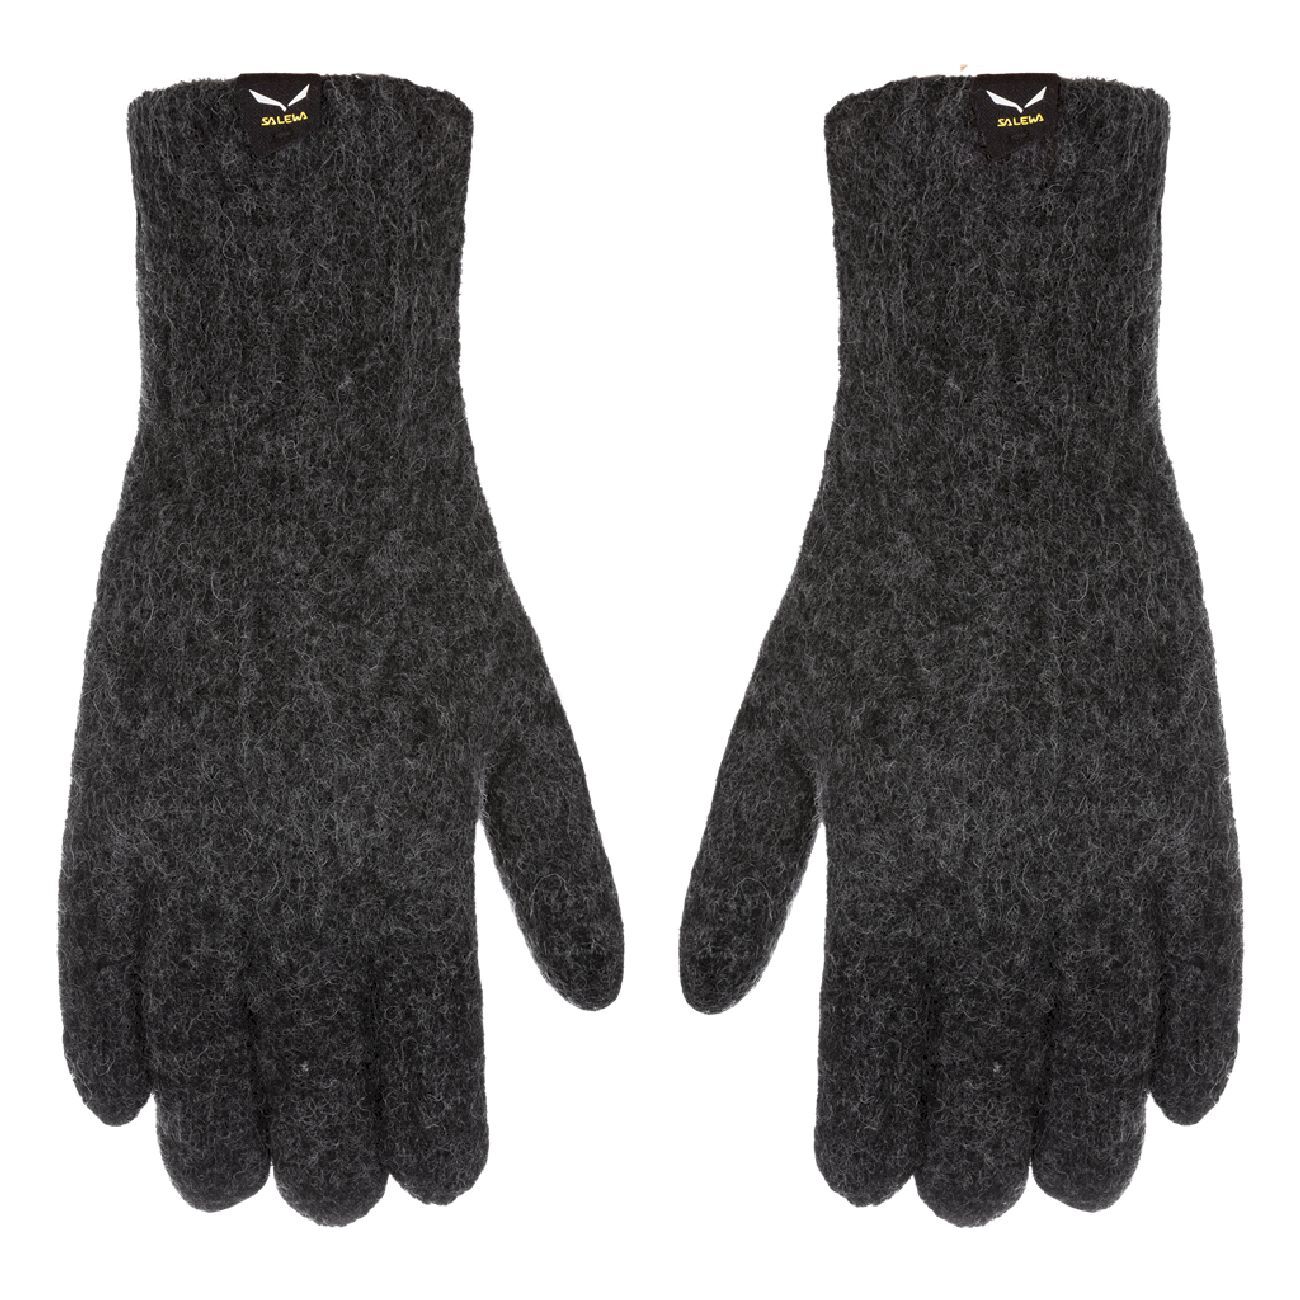 Salewa Walk Wool Gloves - Handsker